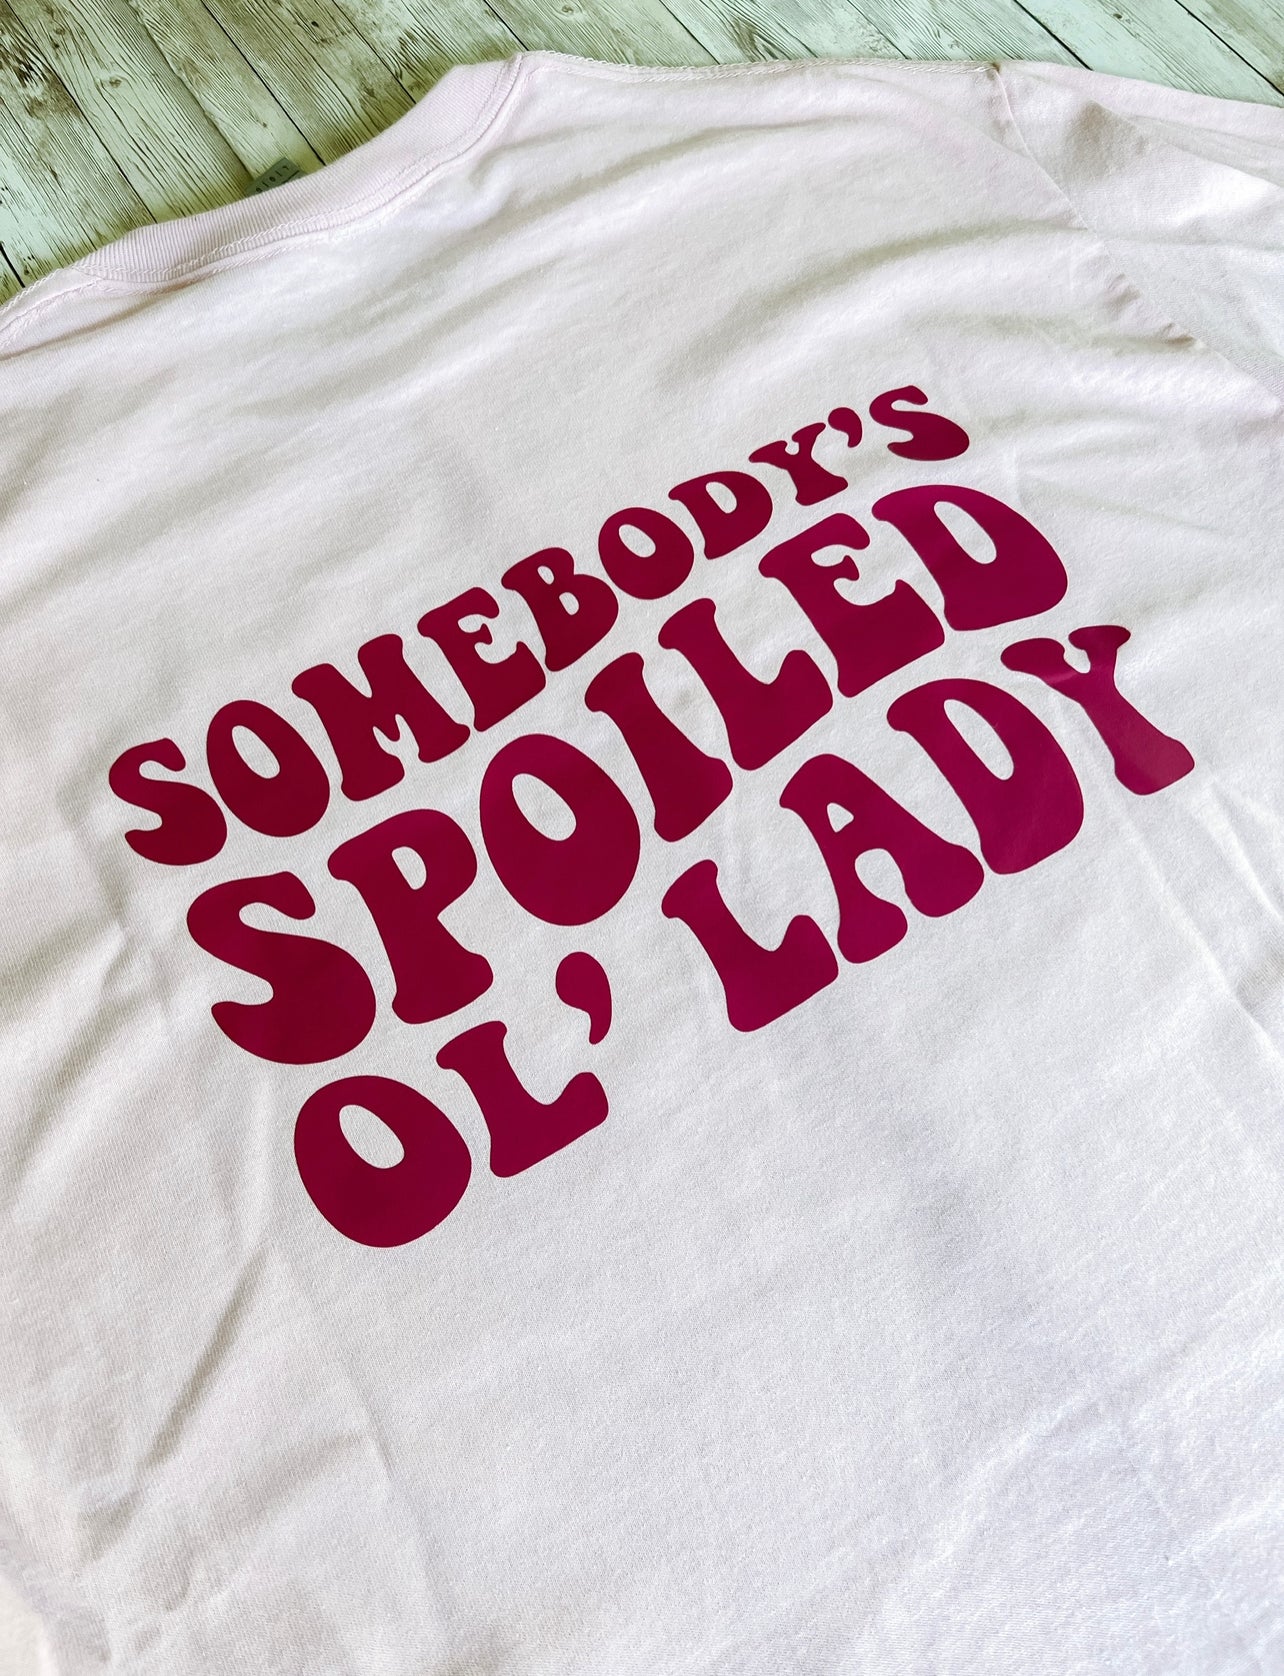 Somebody’s Spoiled Ol’ Lady